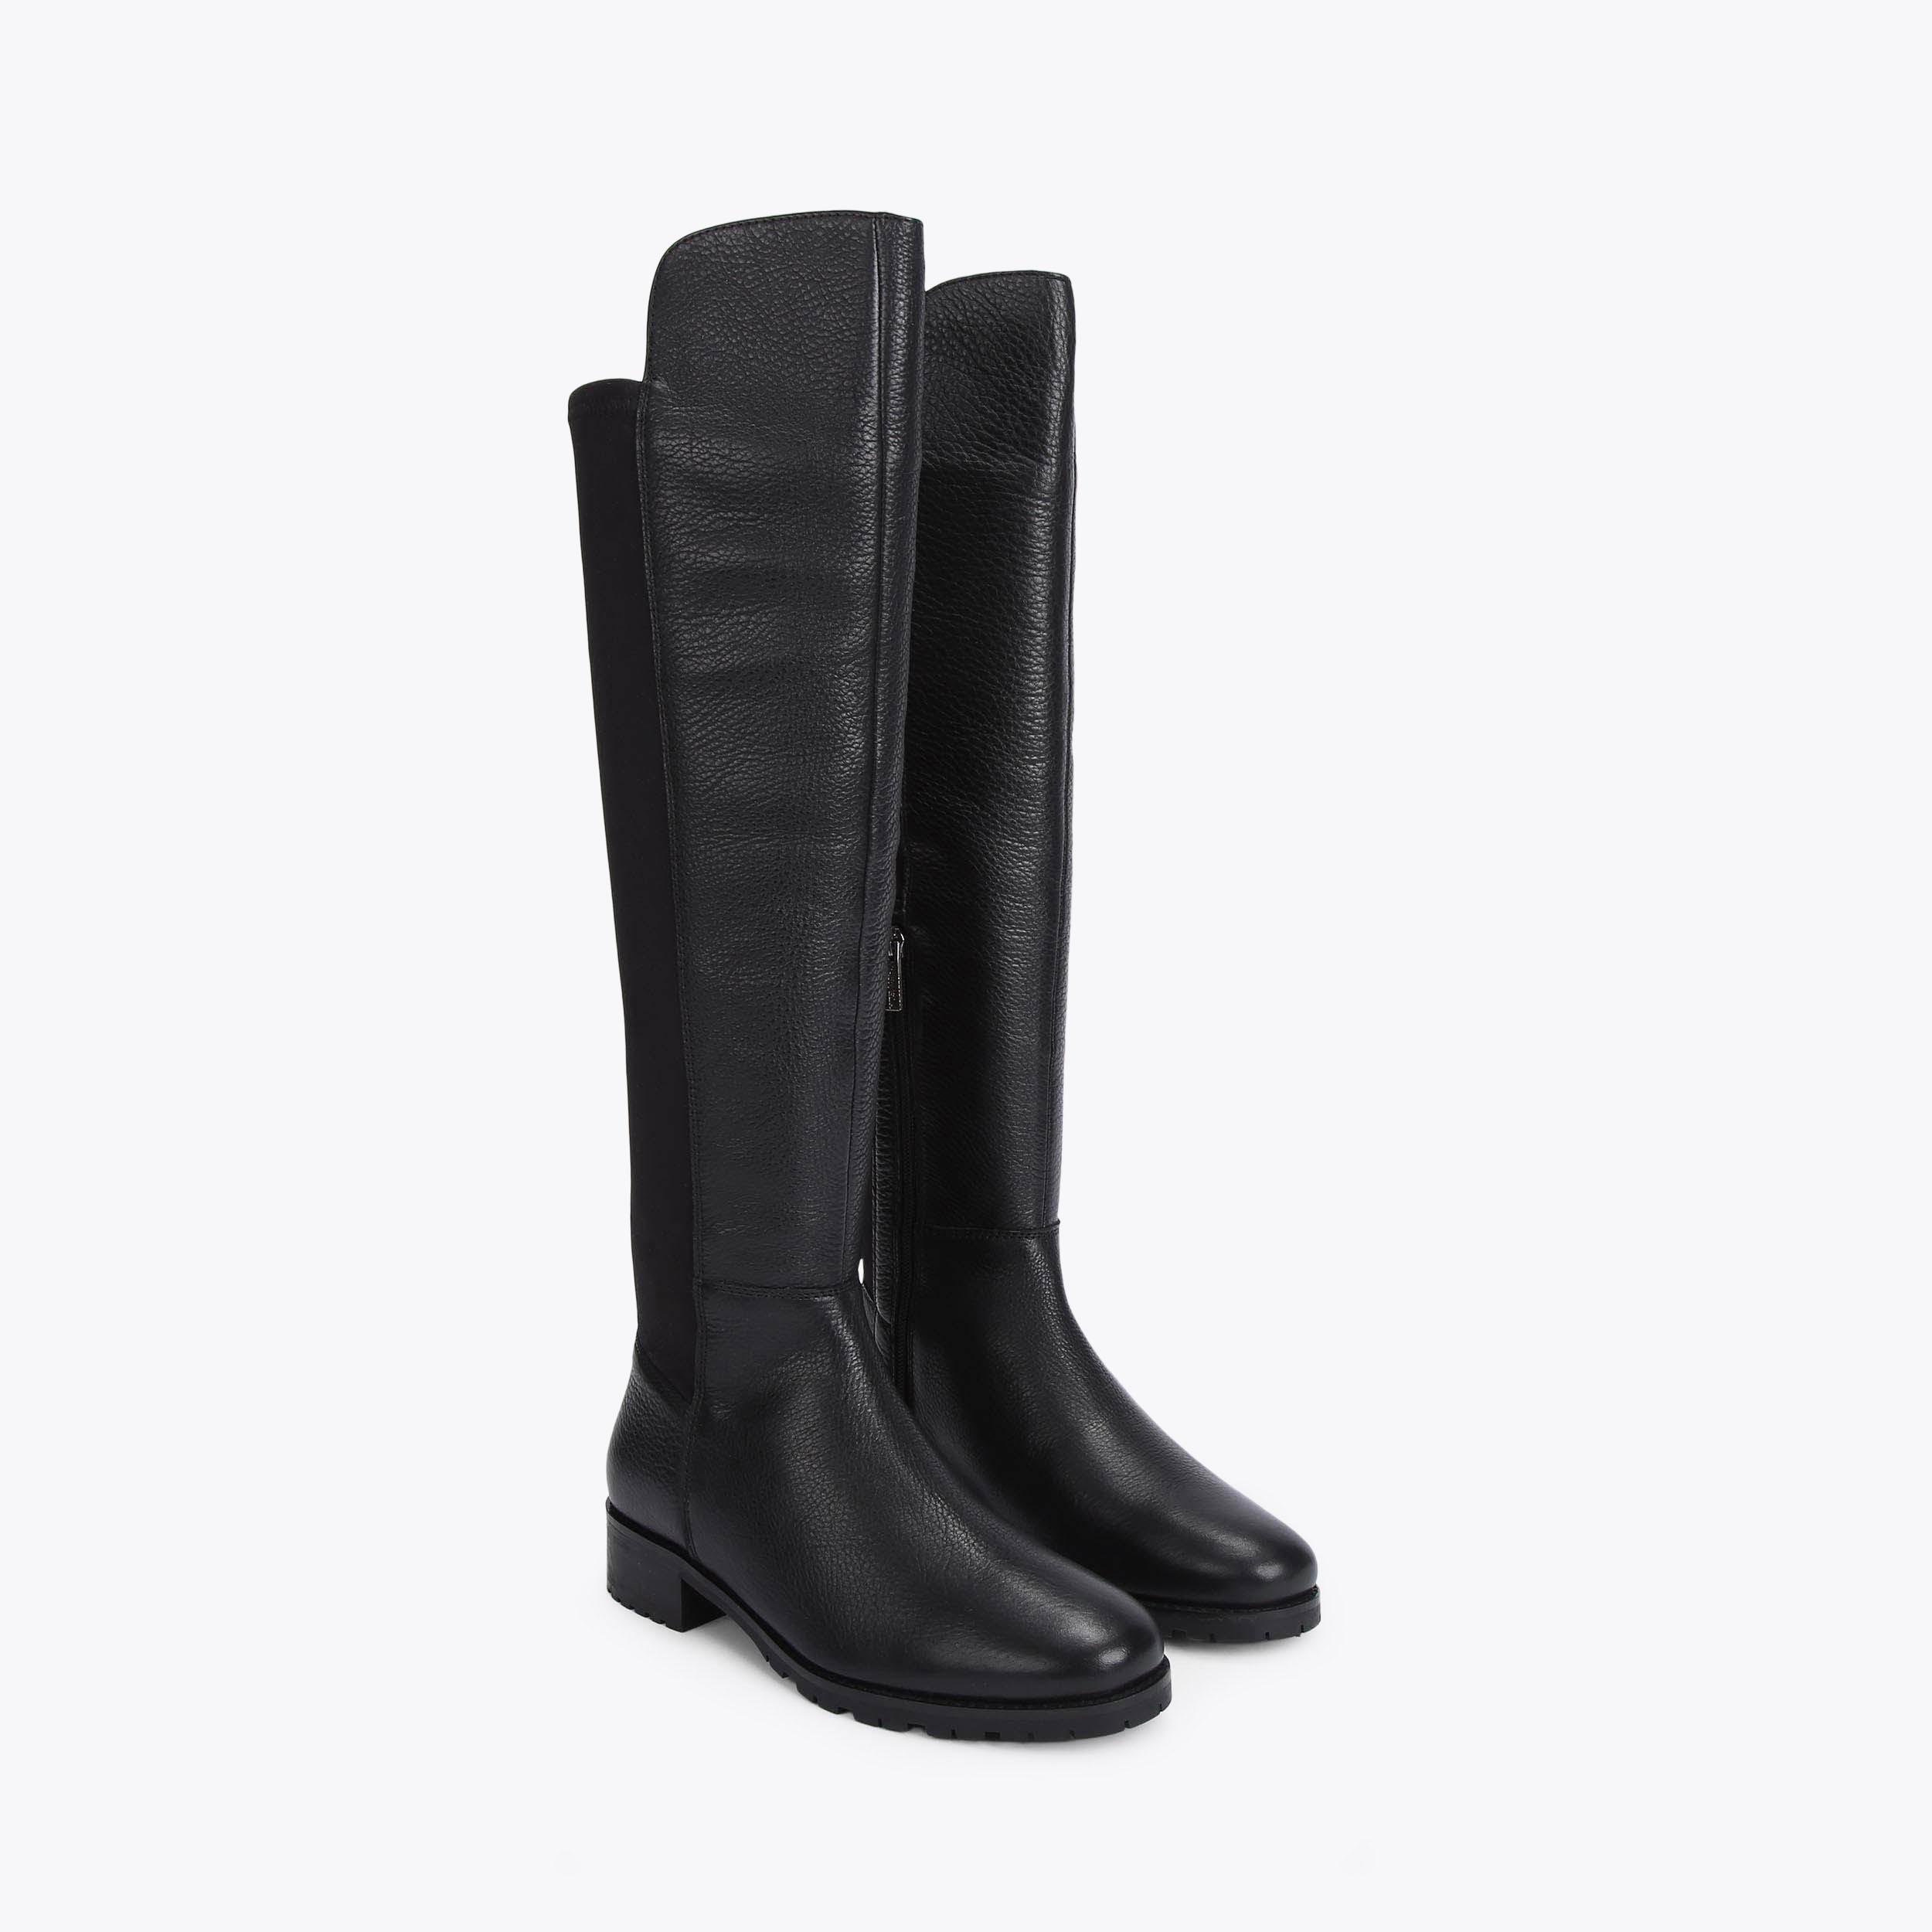 VANESSA 2 Black Leather High Leg Boots by CARVELA COMFORT